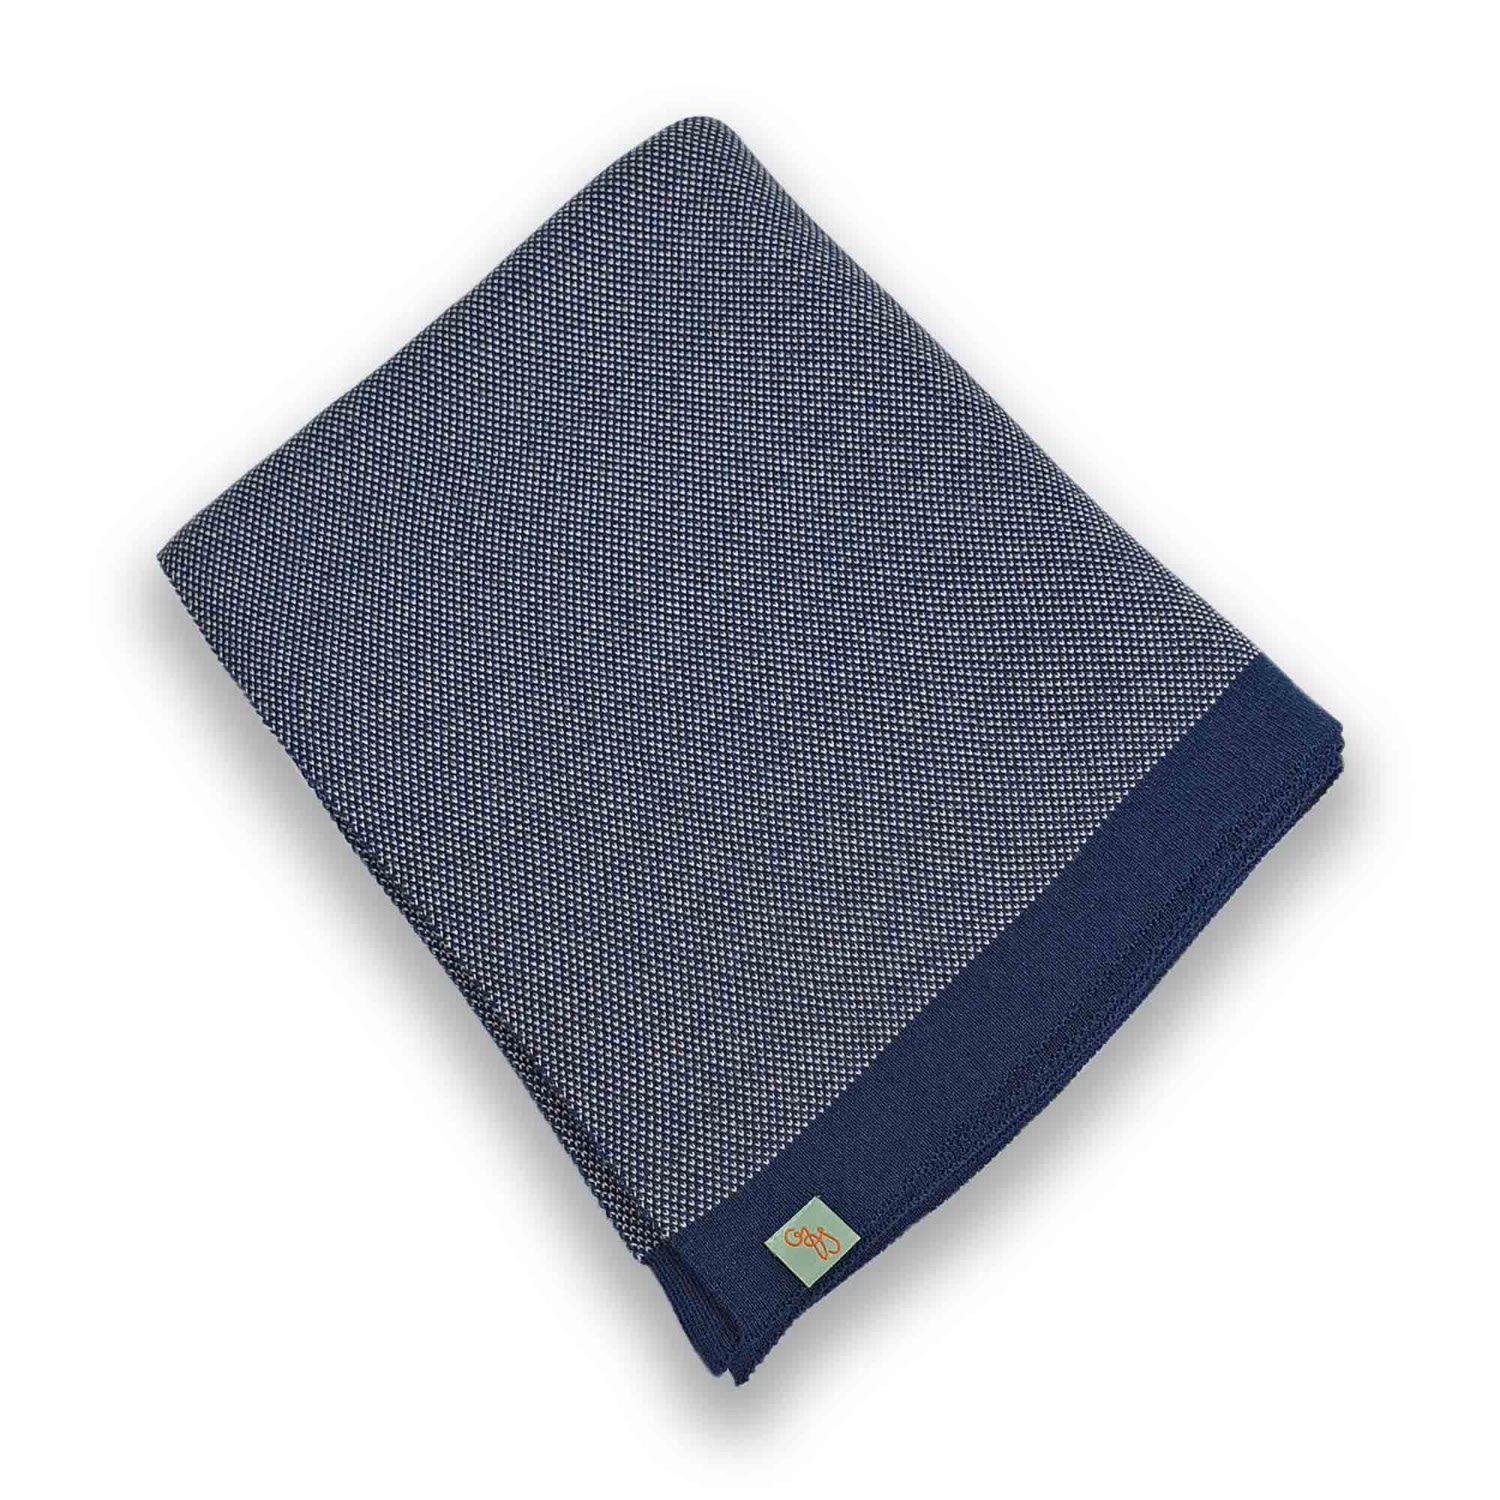 Lightweight Wool Blankets - Lolly - Indigo Blue - X-Small Otto & Spike